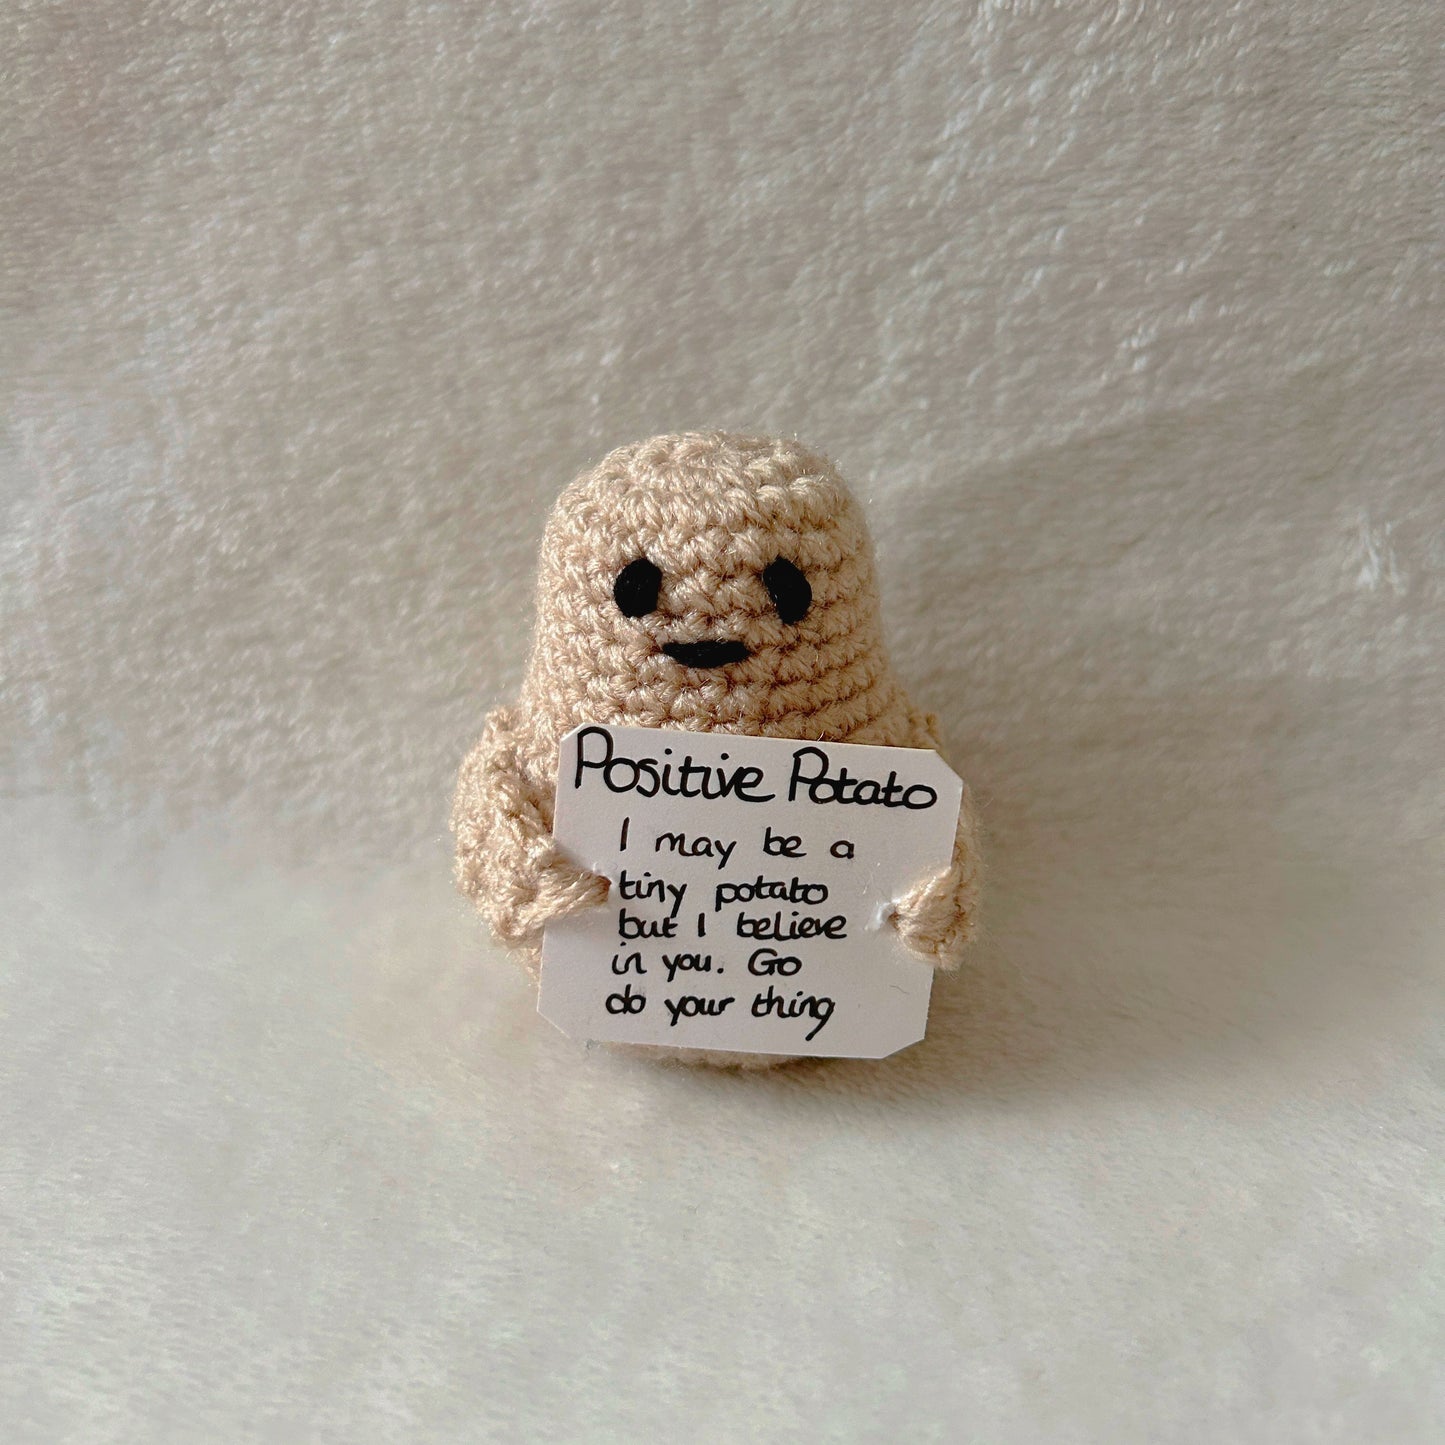 Positive Potato Crochet Toy